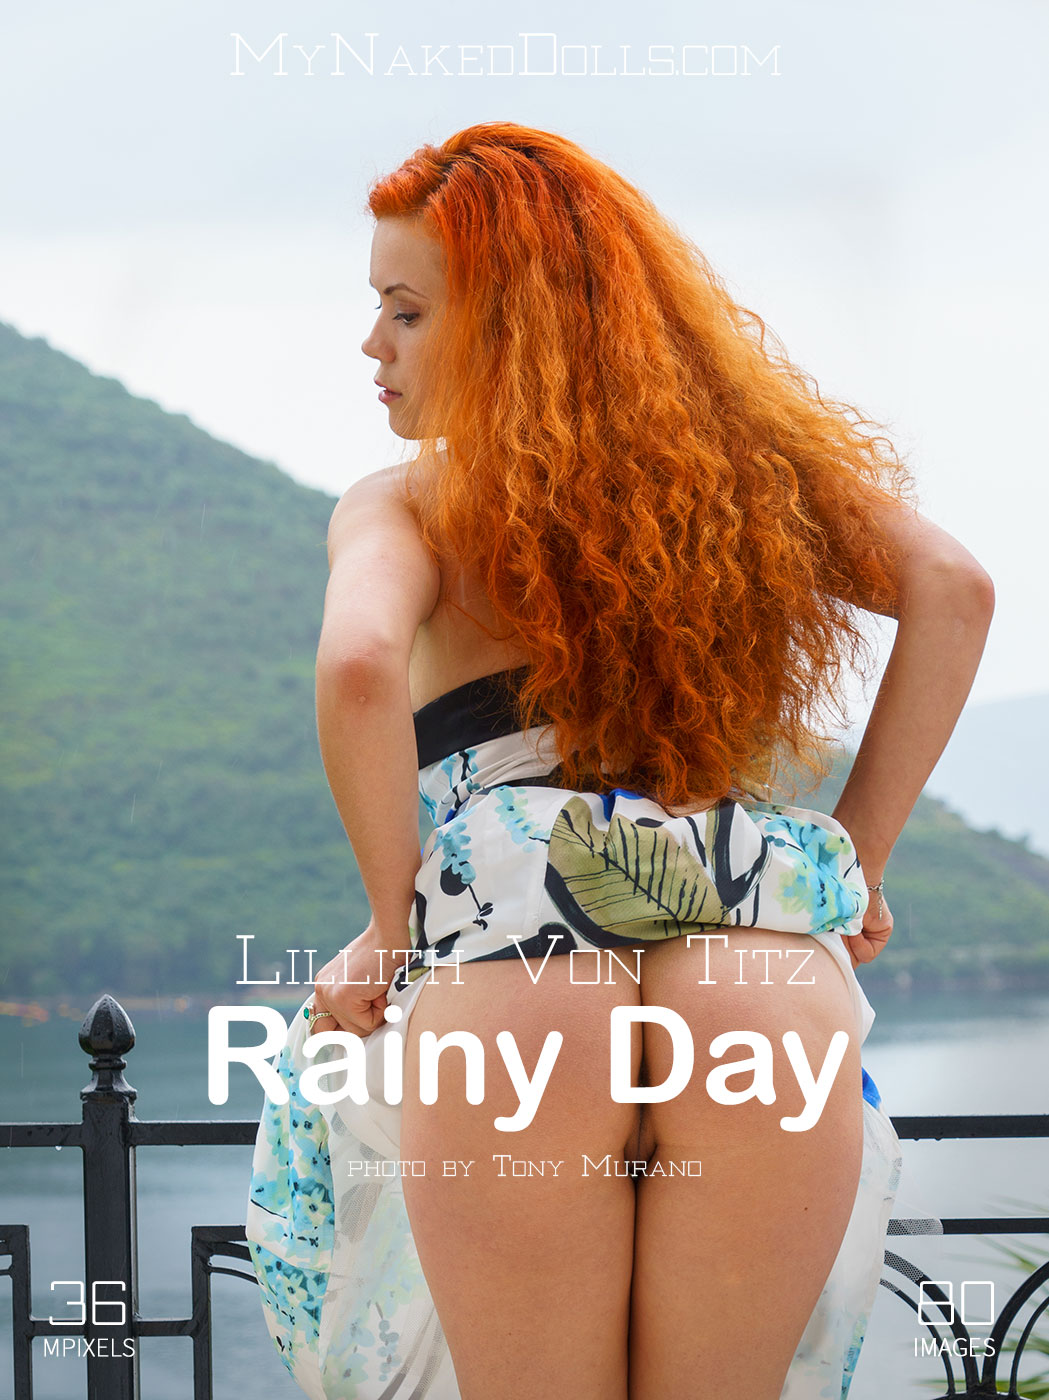 Rainy Day Lillith Von Titz Cover